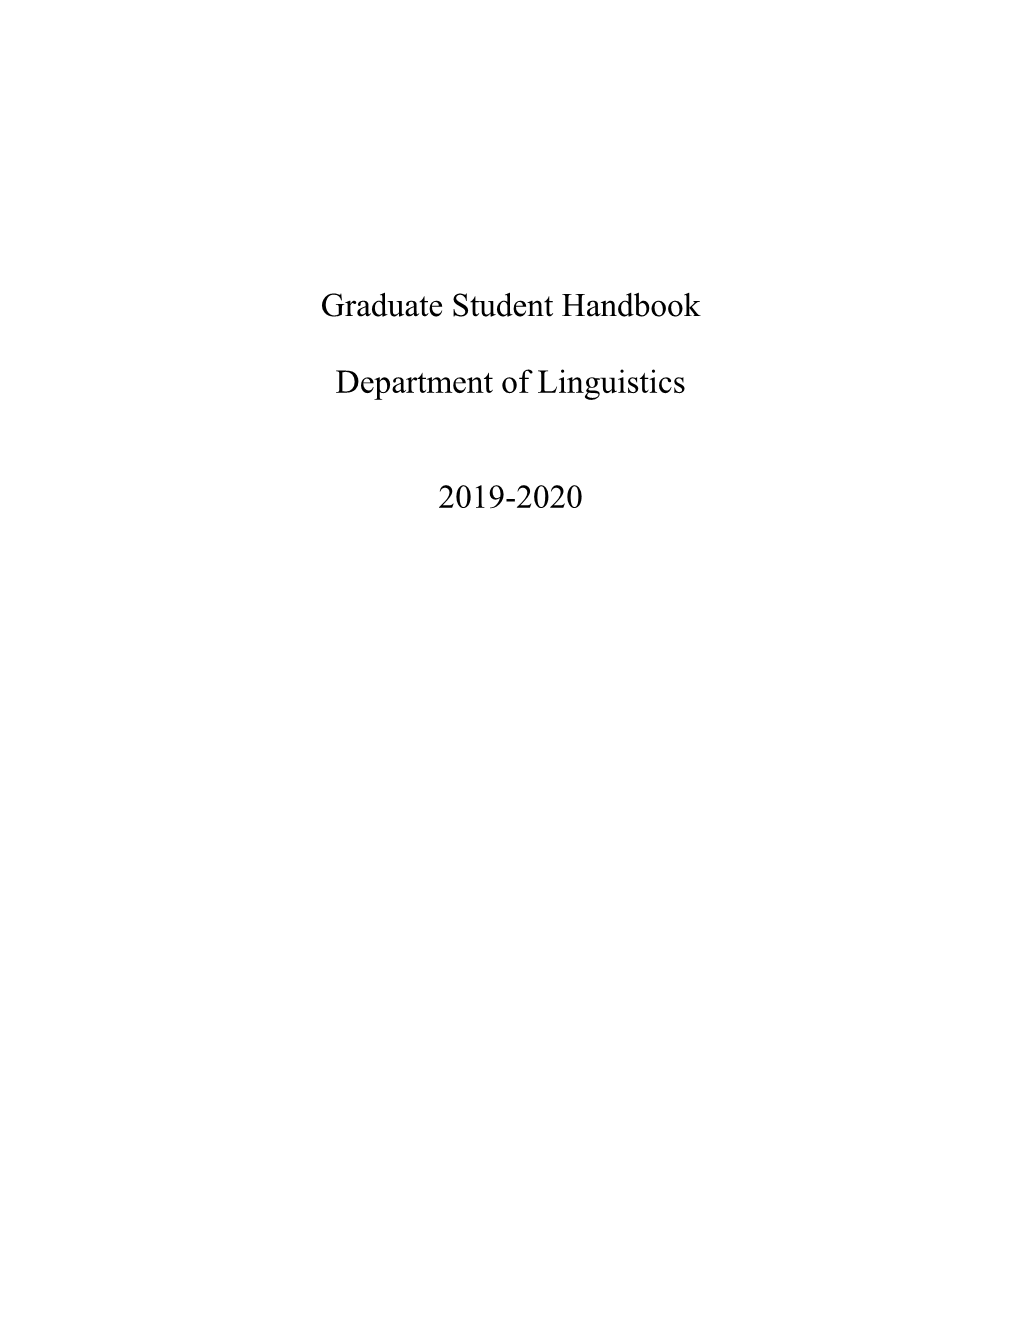 Graduate Student Handbook Department of Linguistics 2019-2020